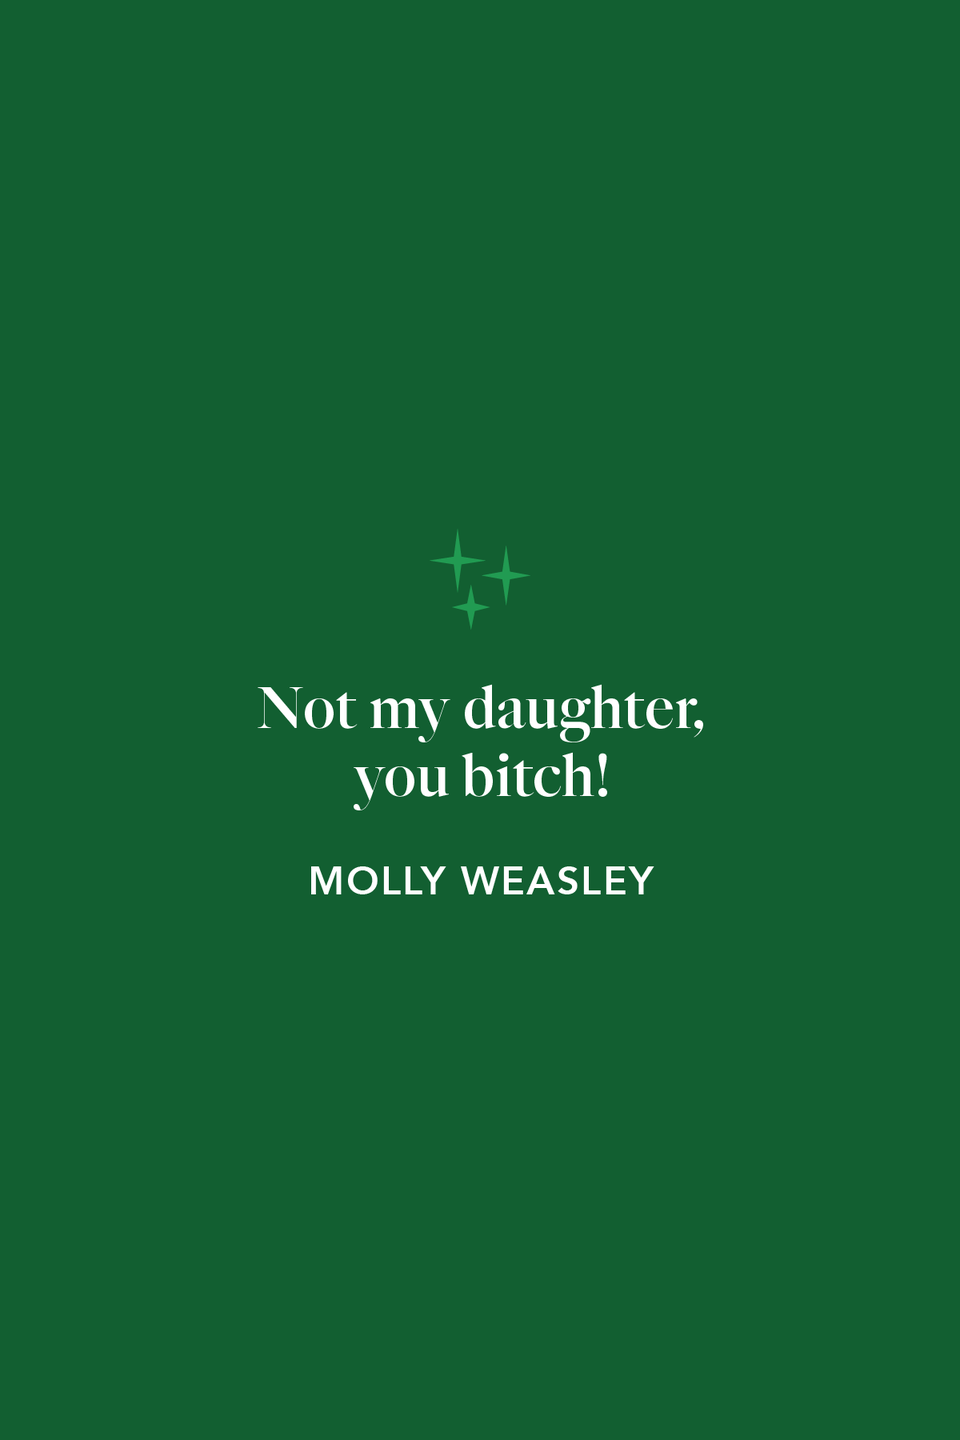 Molly Weasley to Bellatrix Lestrange